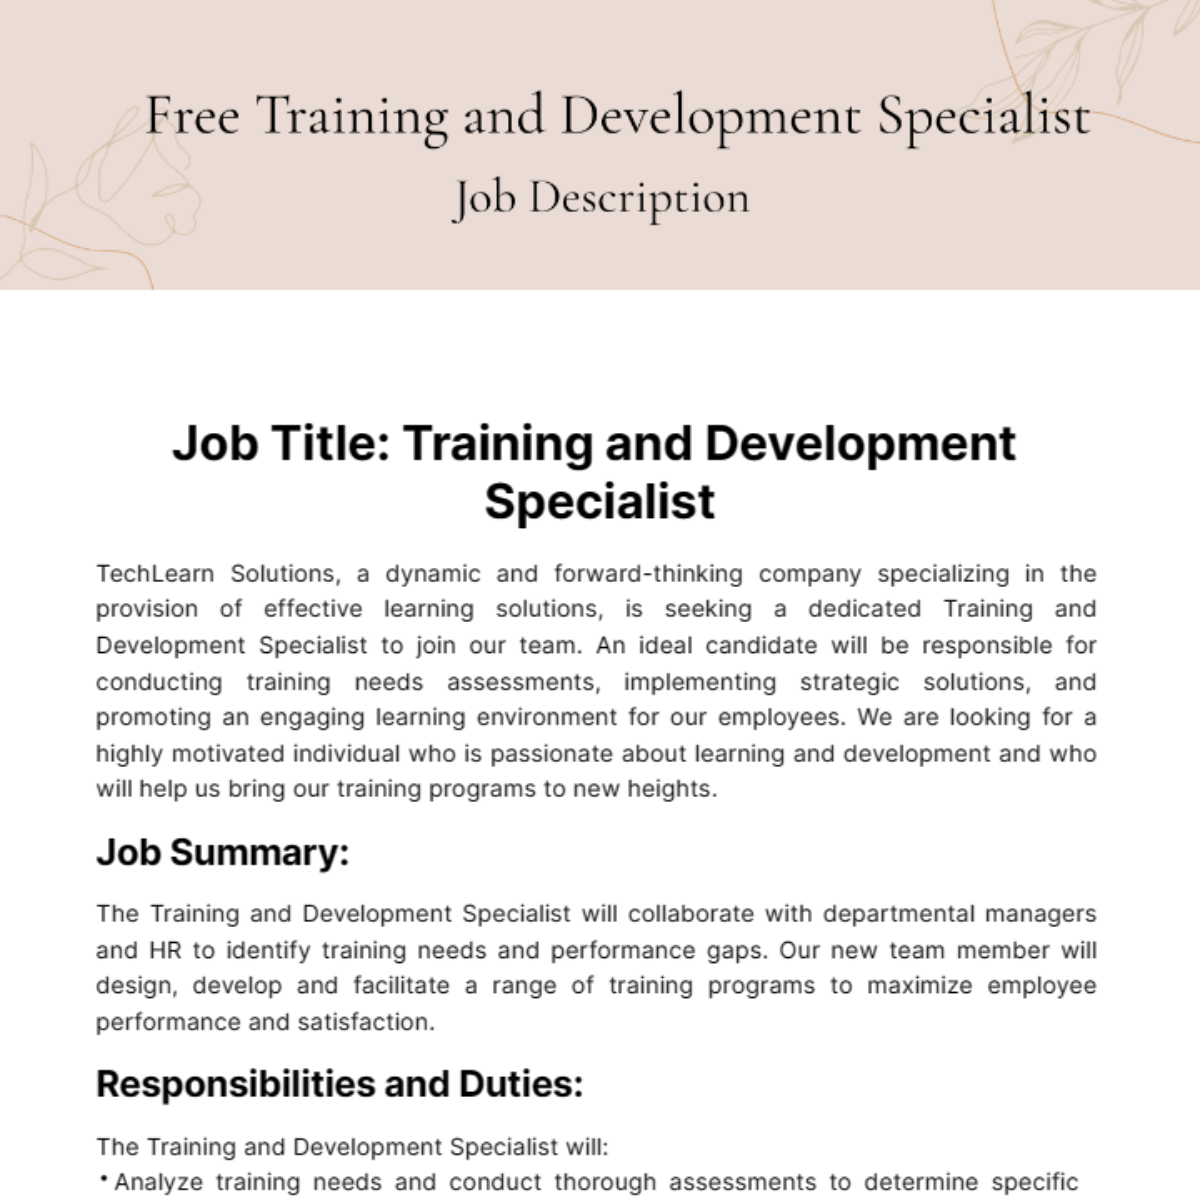 Training and Development Specialist Job Description Template